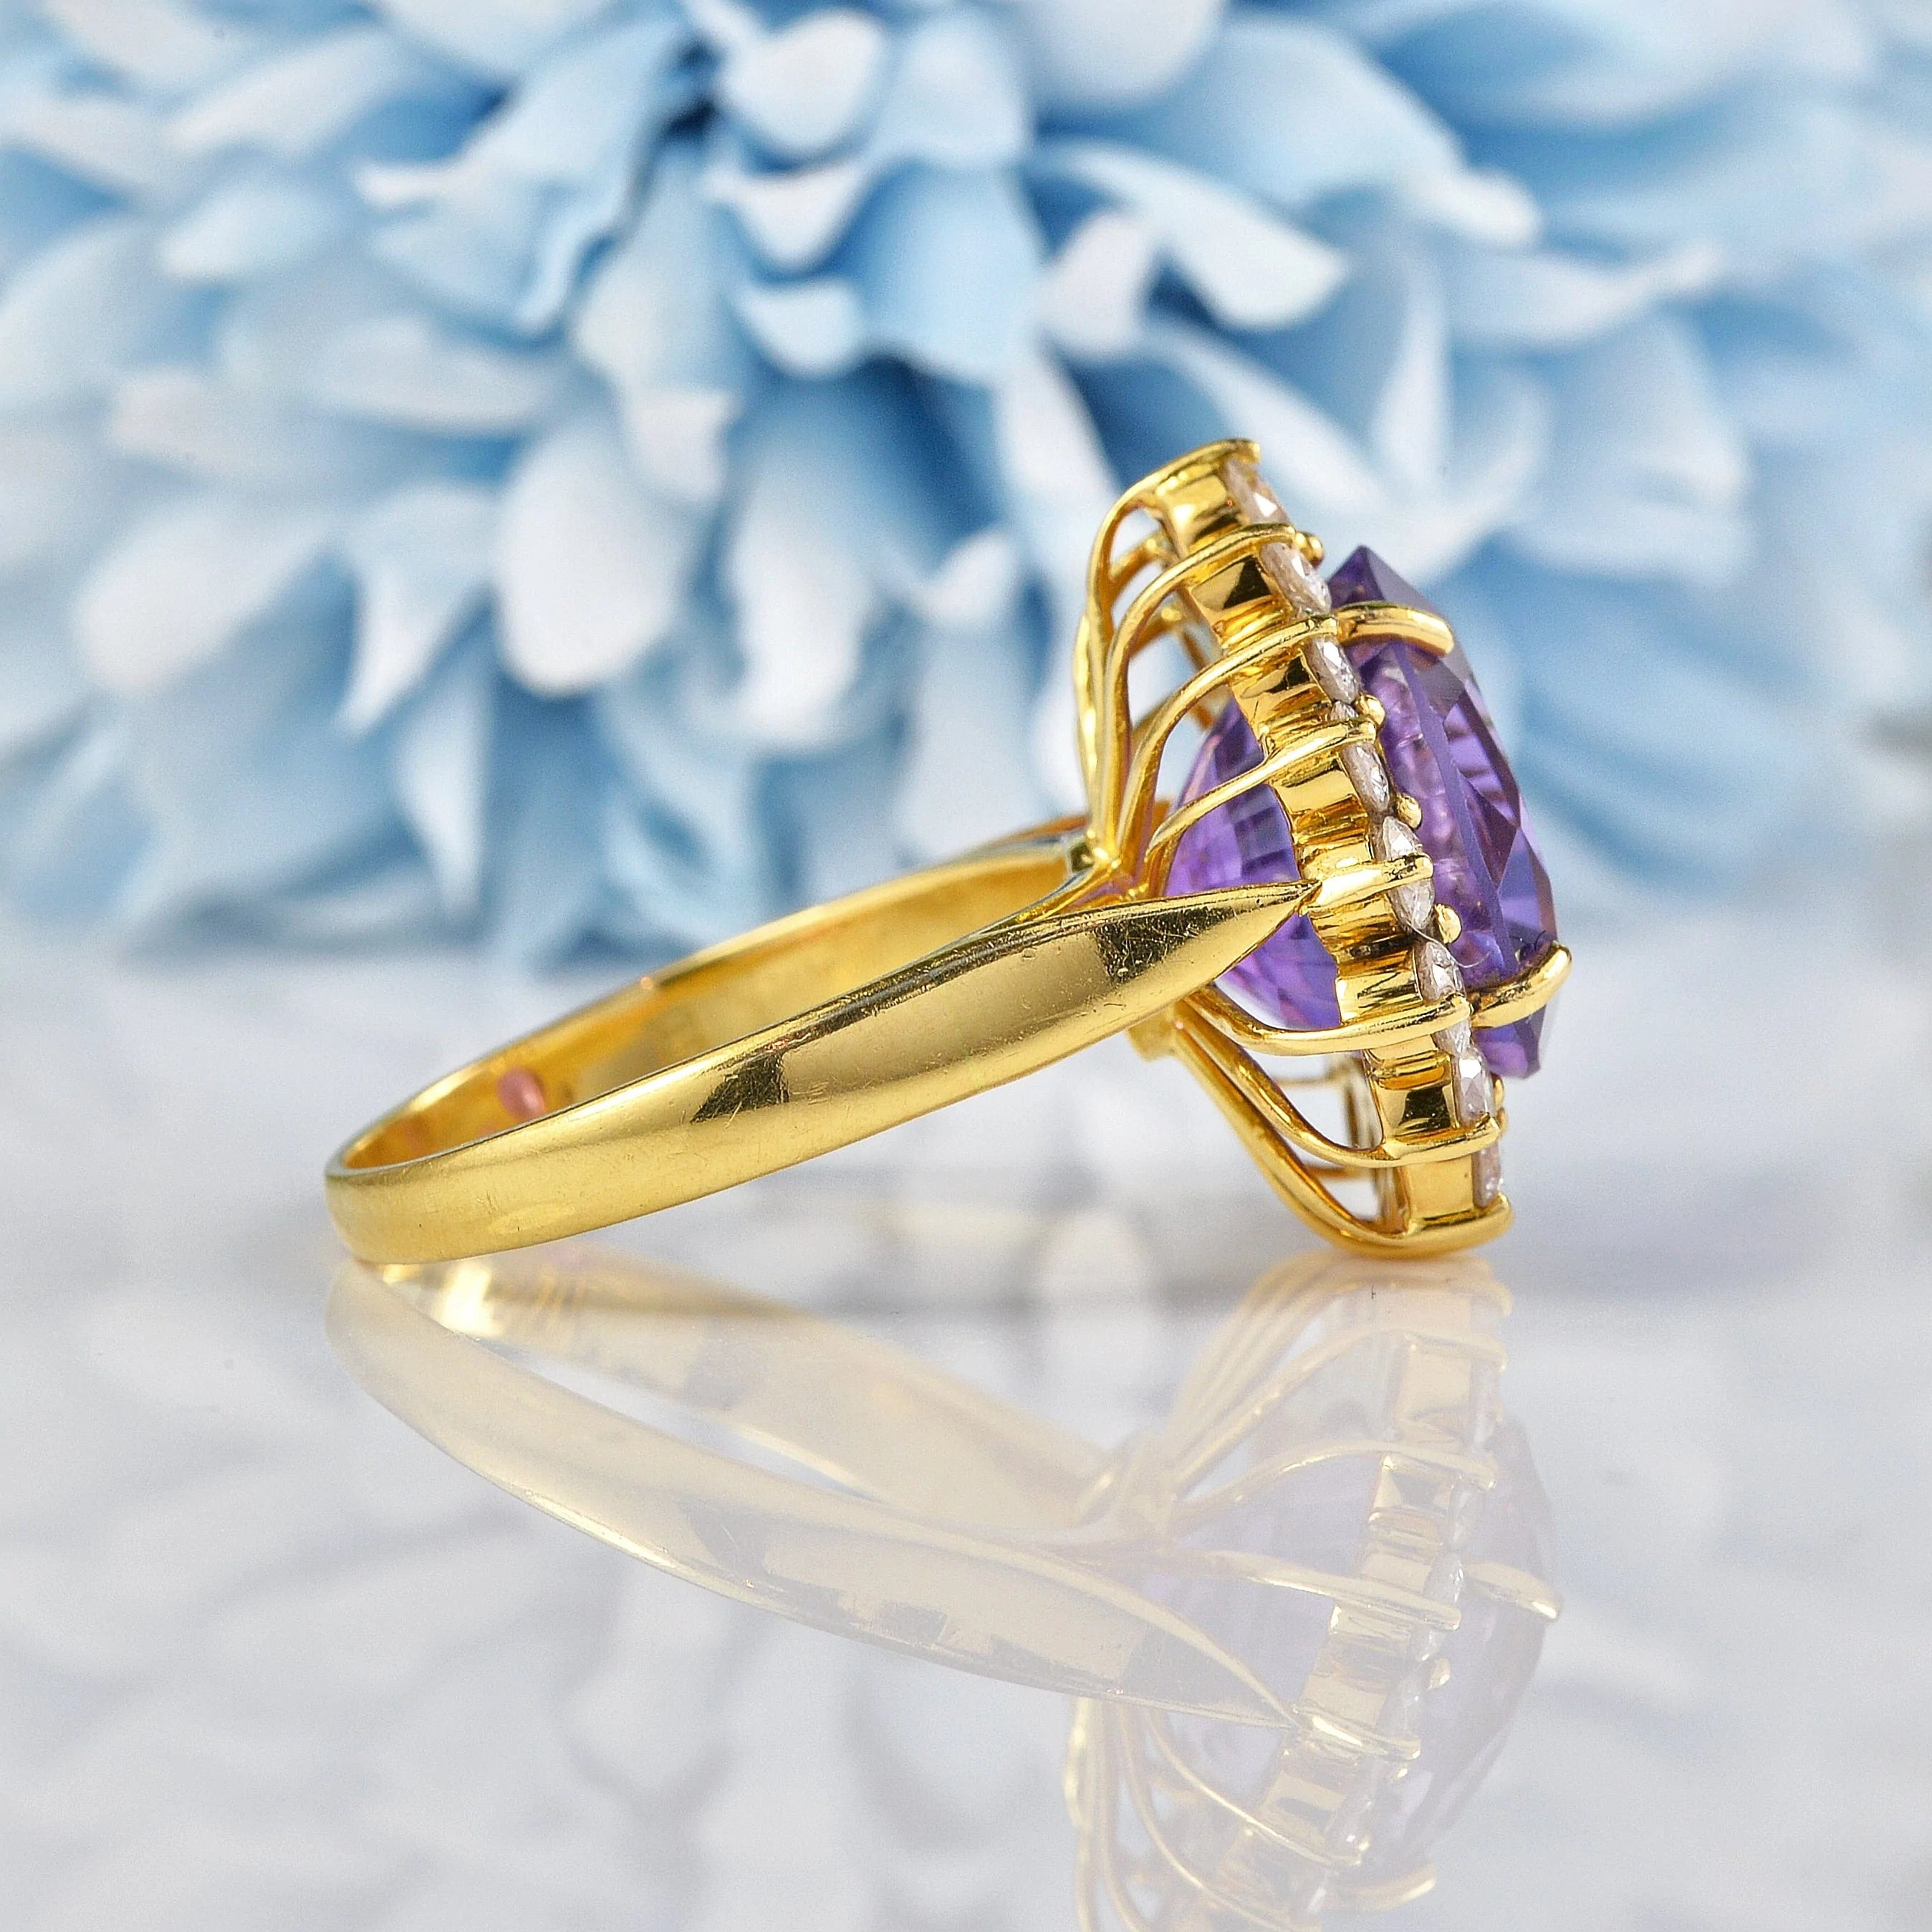 Ellibelle Jewellery Amethyst & Diamond 18ct Gold Dress Ring